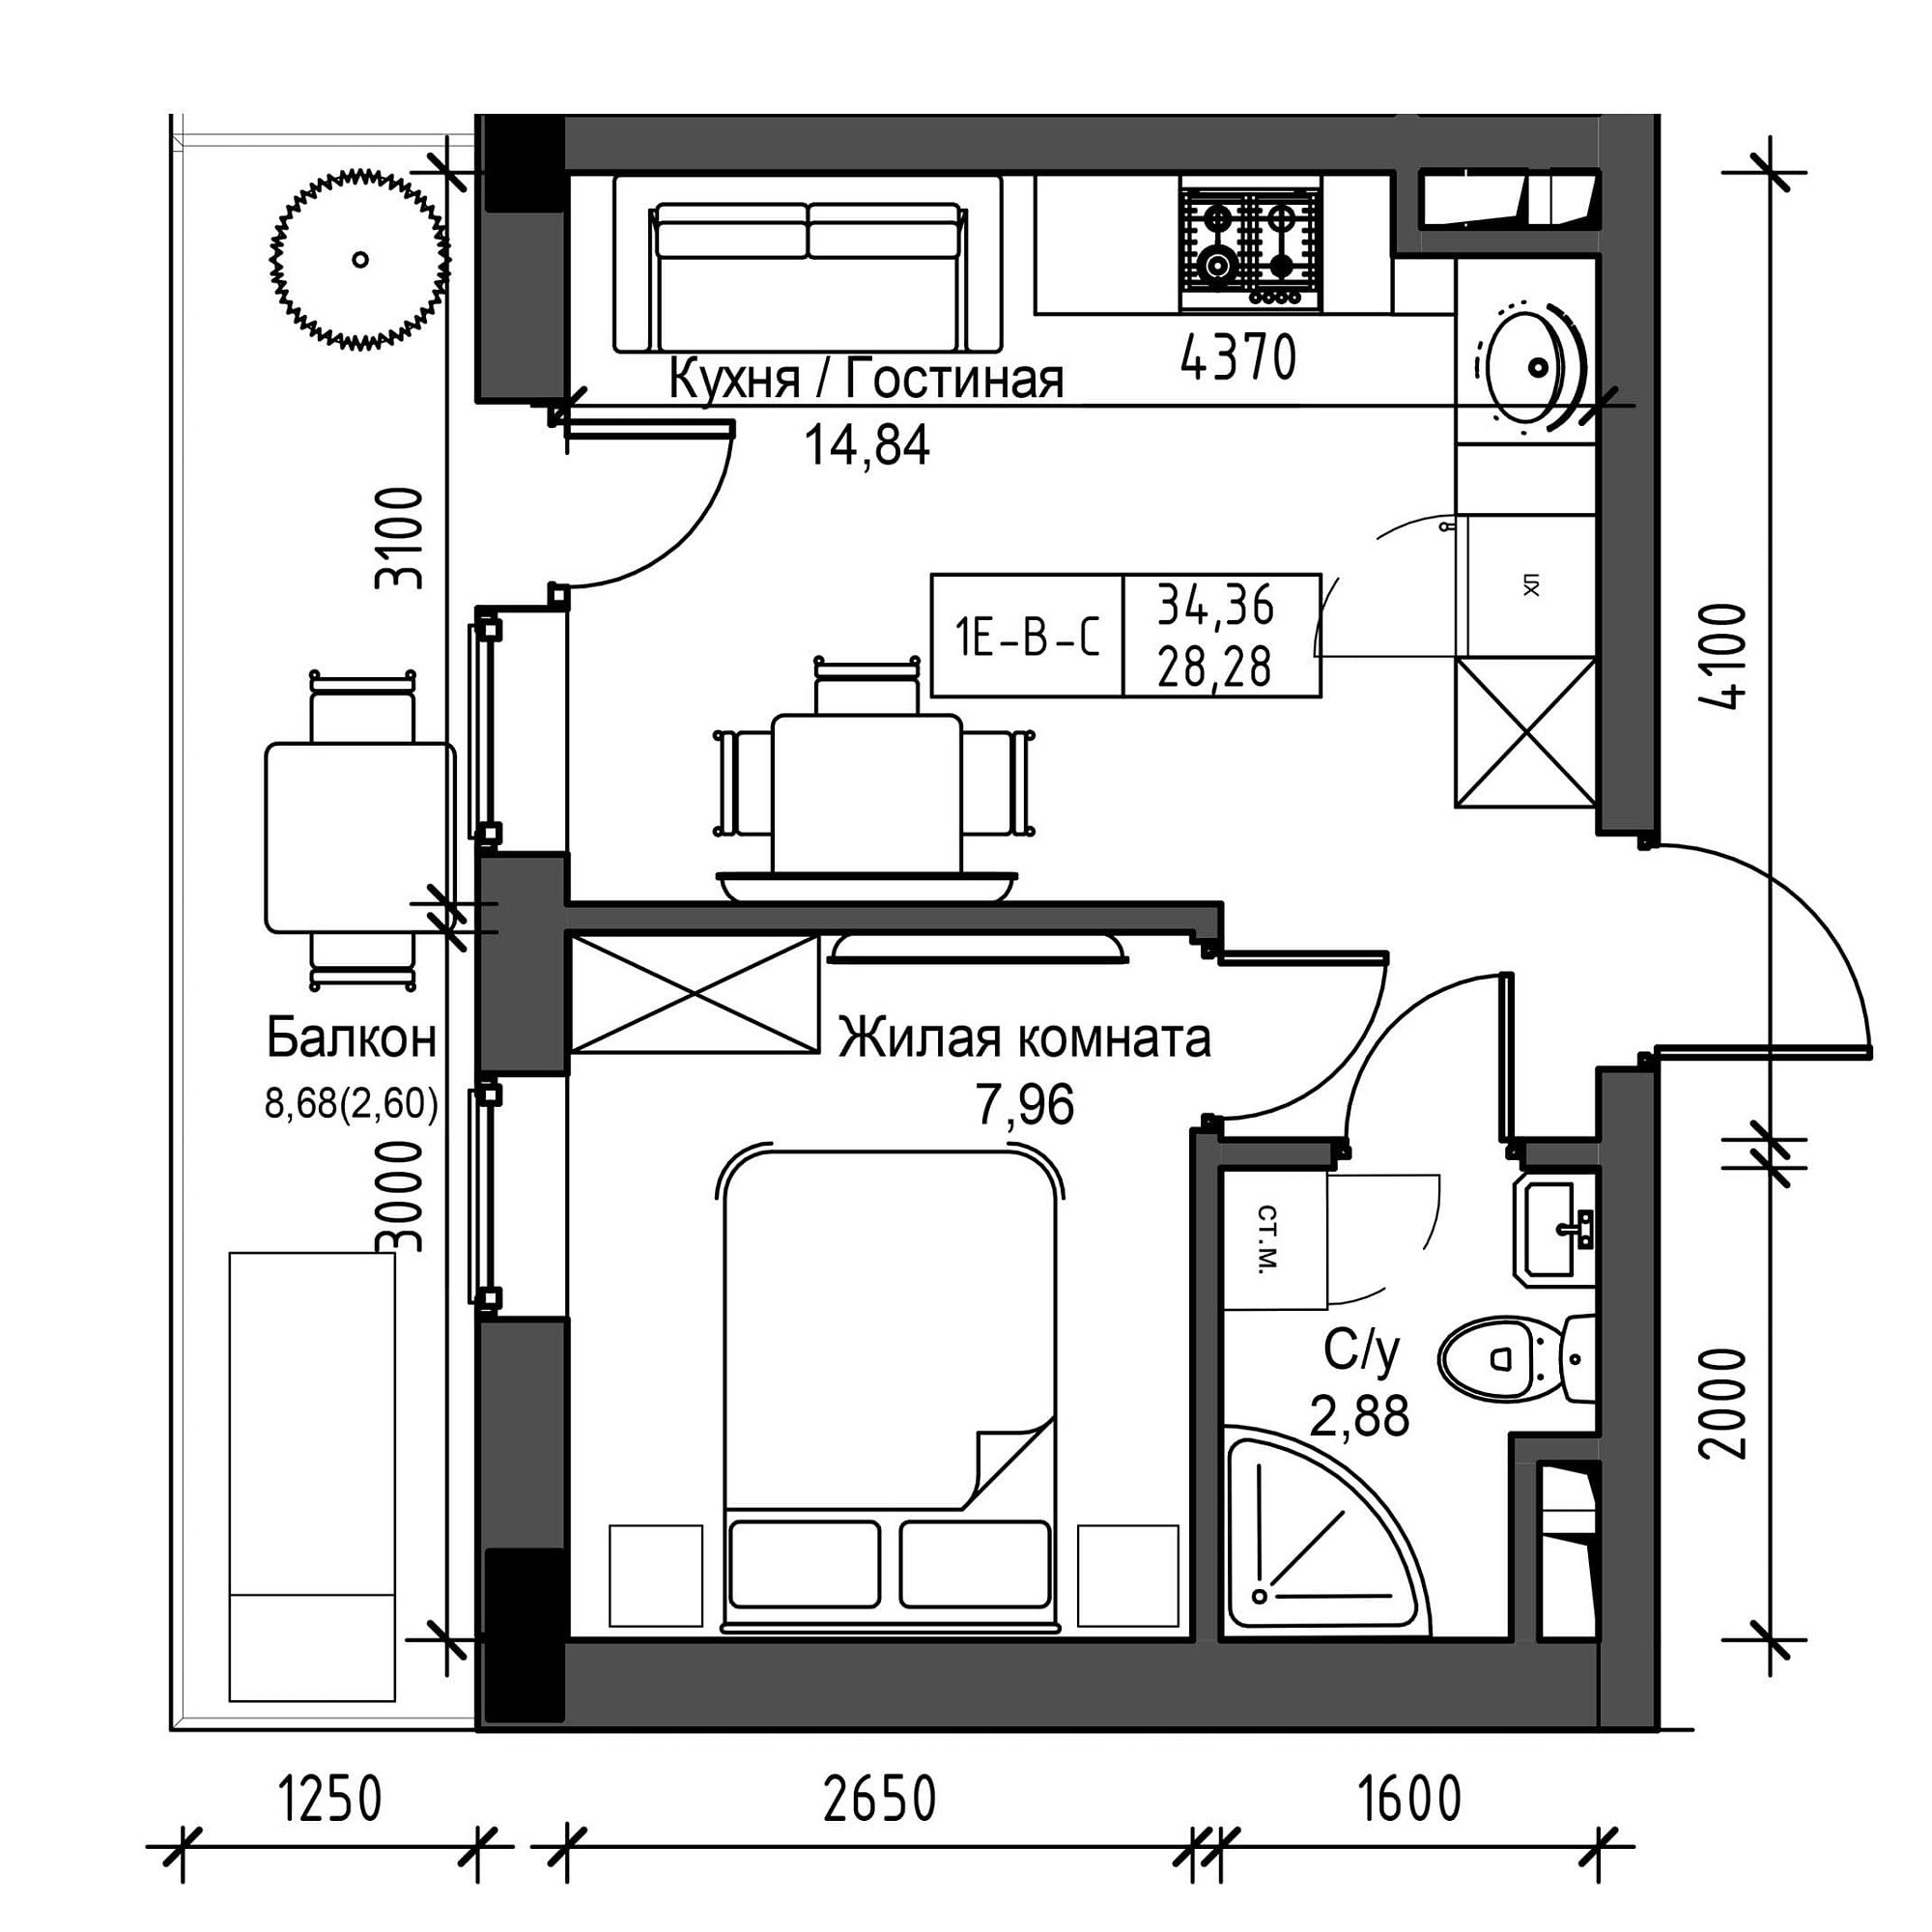 Planning 1-rm flats area 28.28m2, UM-001-05/0014.